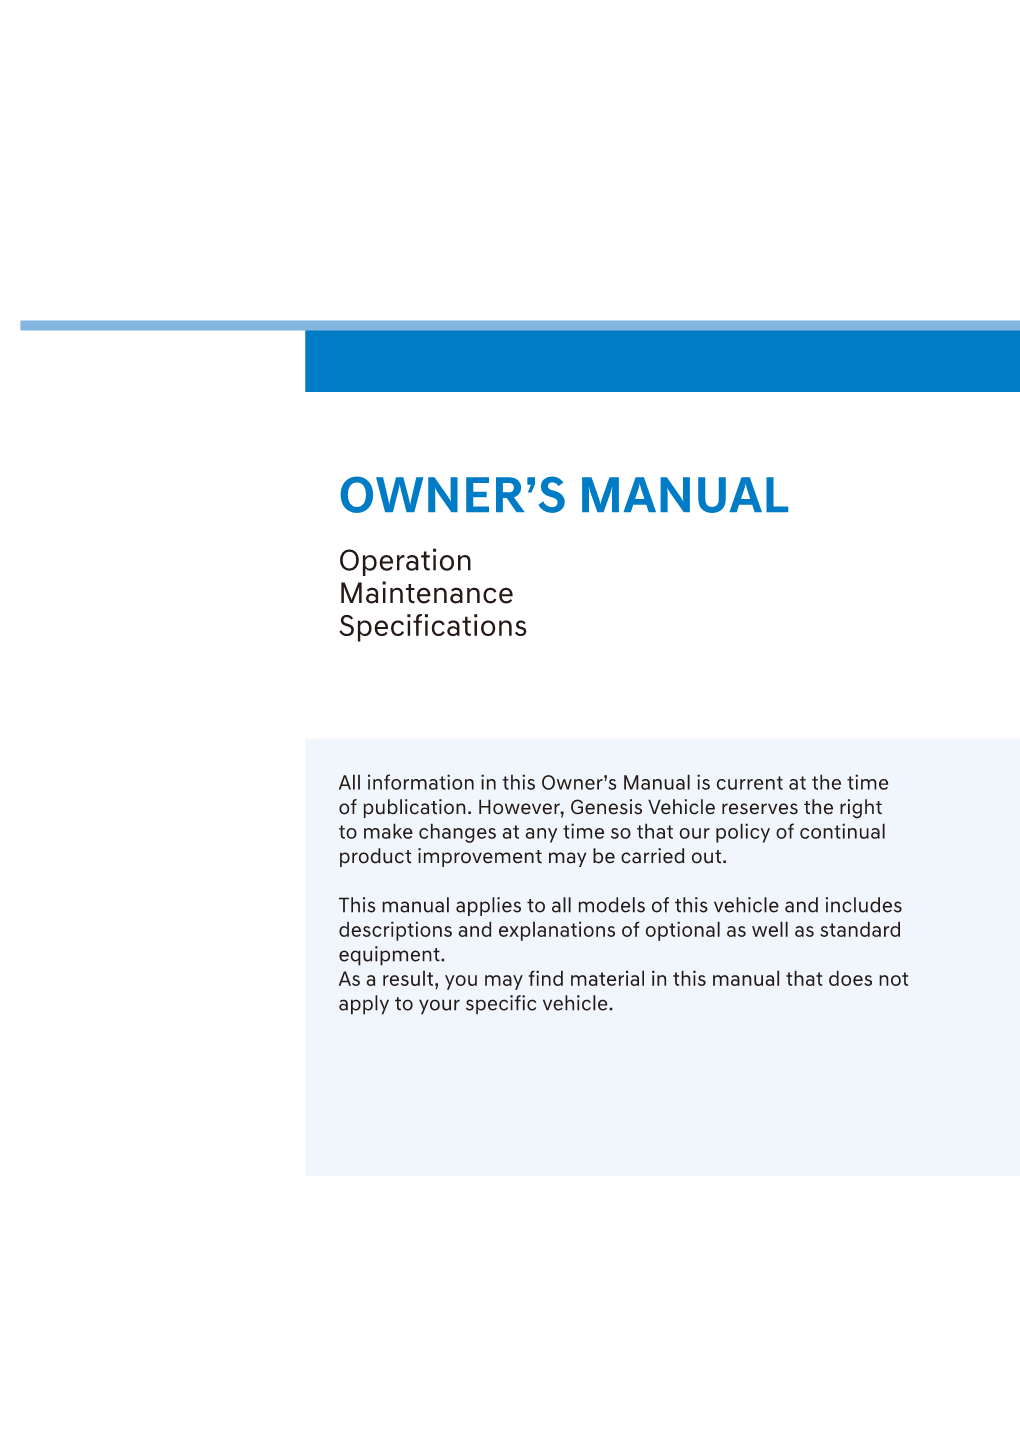 Owners Manual Gv80 English Pdf, 11.7 Mb